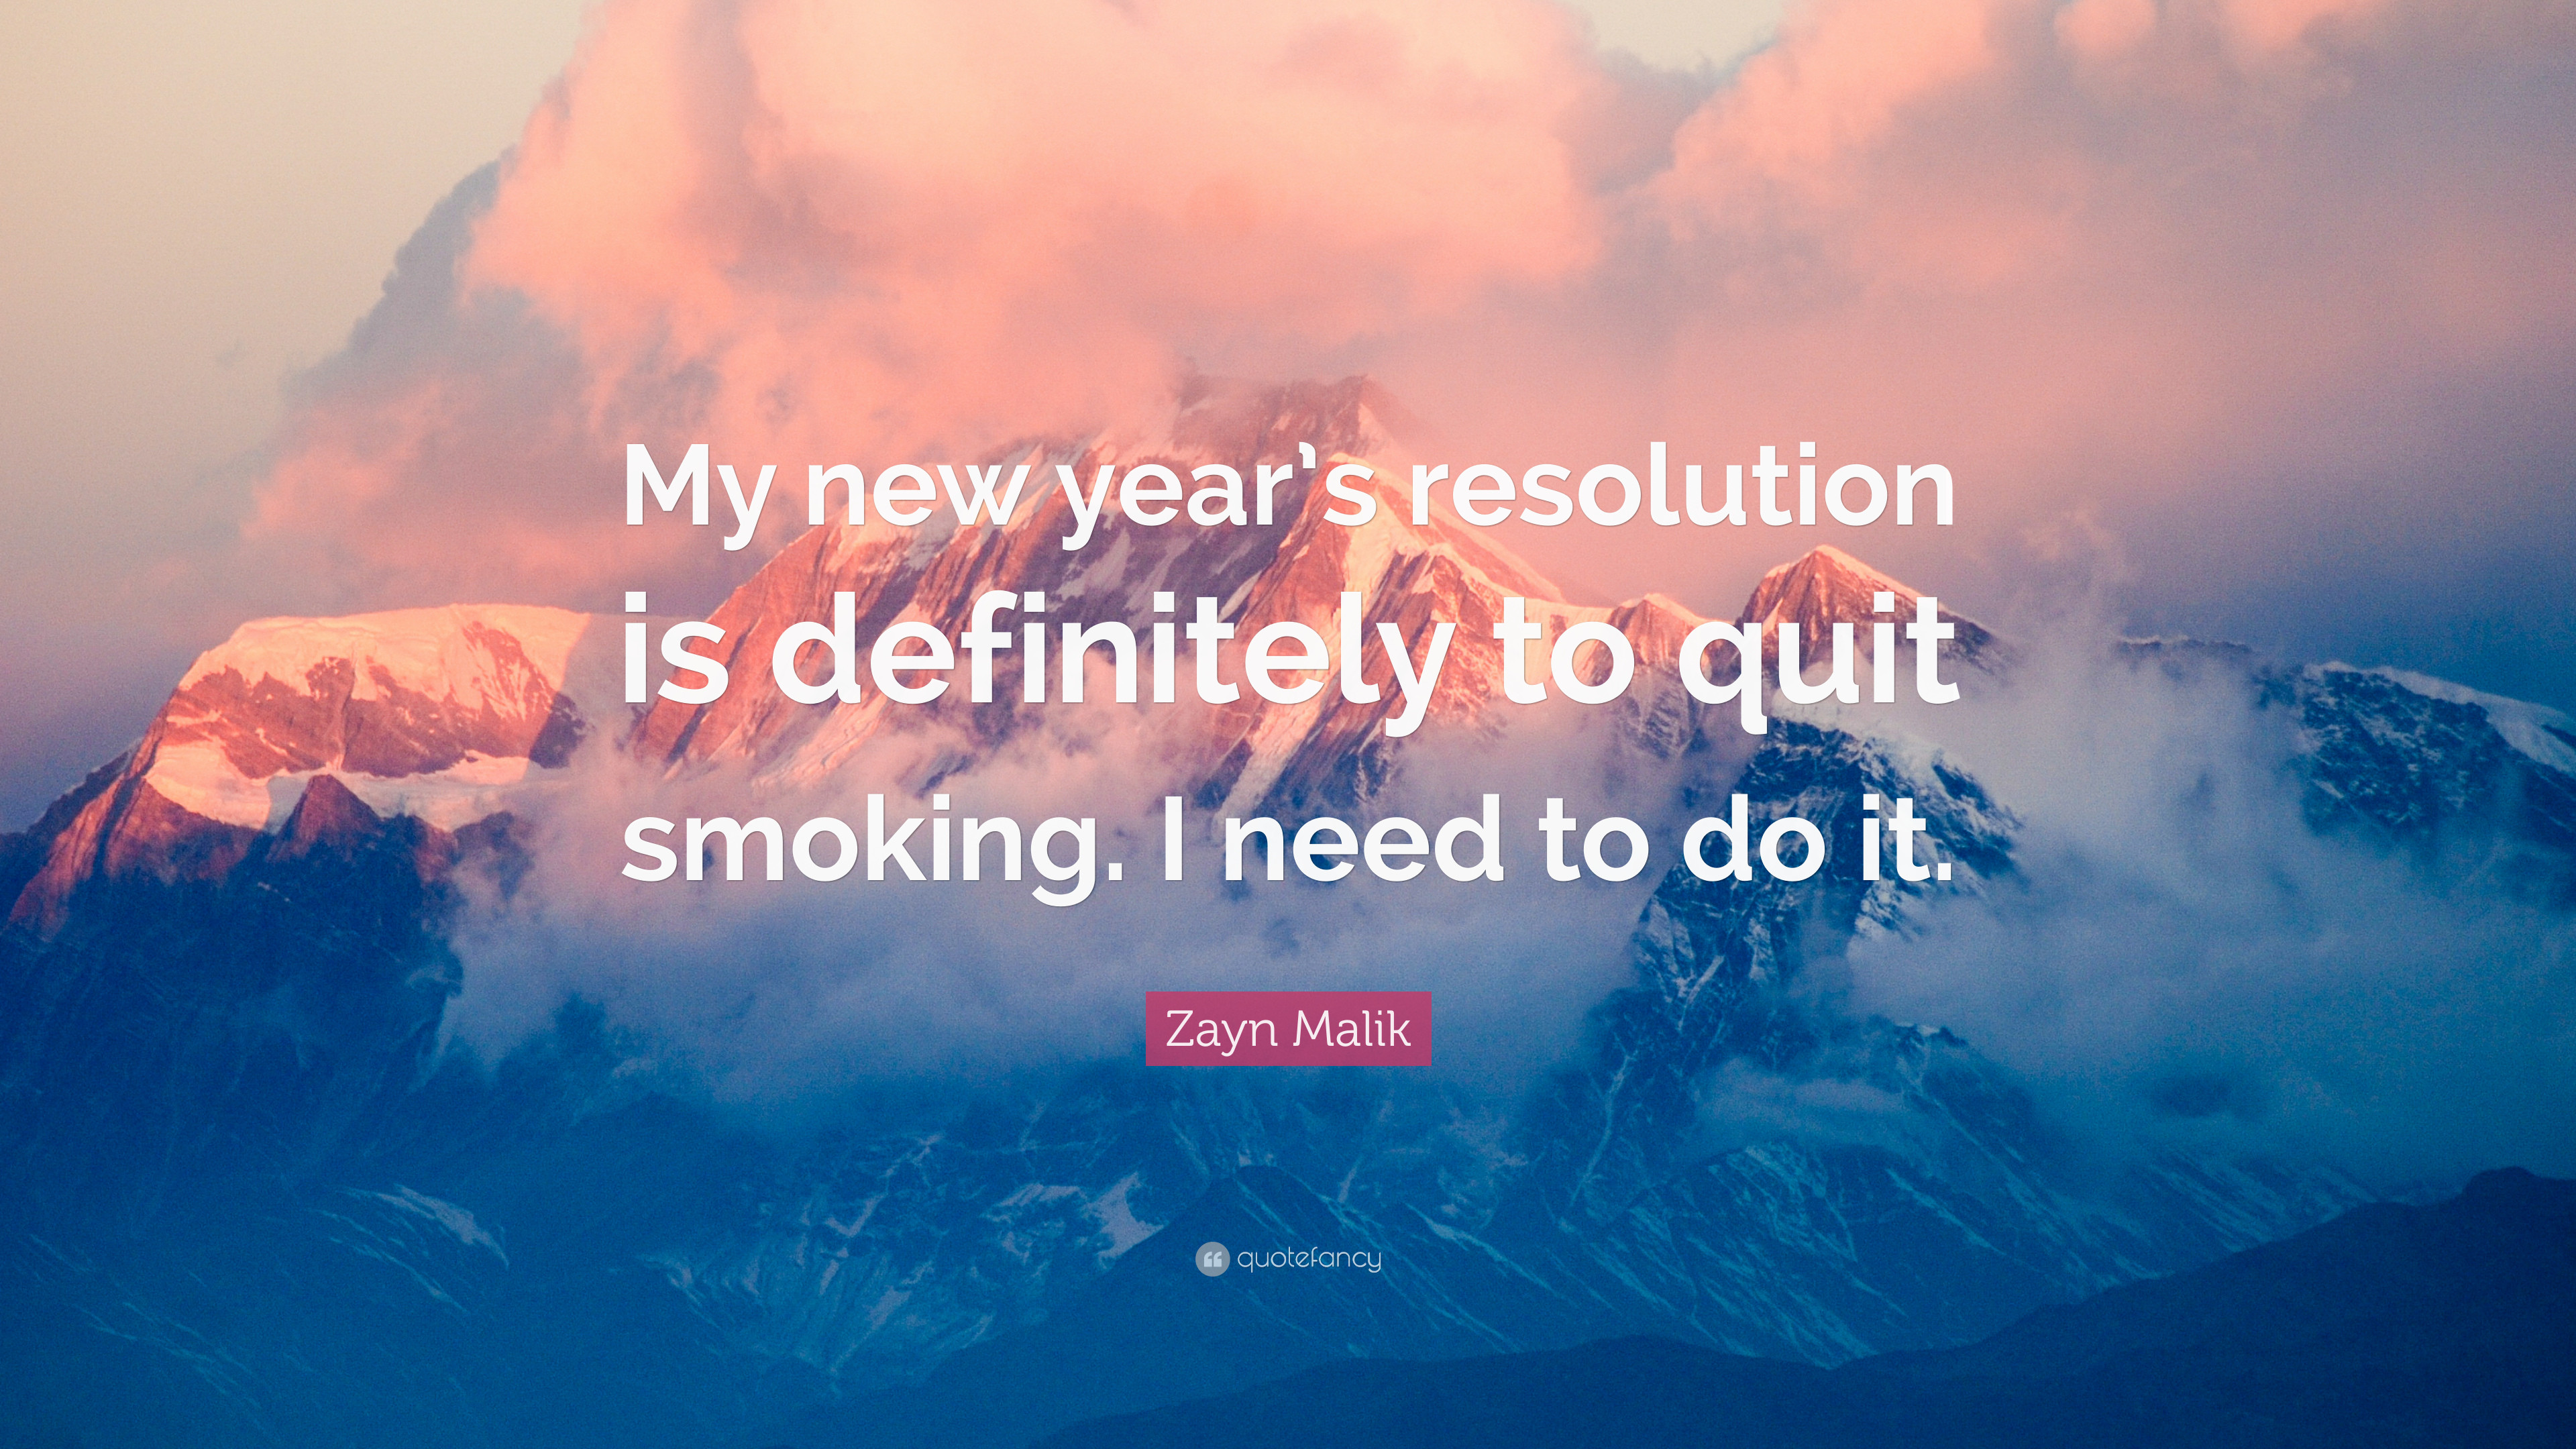 3840x2160 Zayn Malik Quote: “My new year's resolution is definitely .